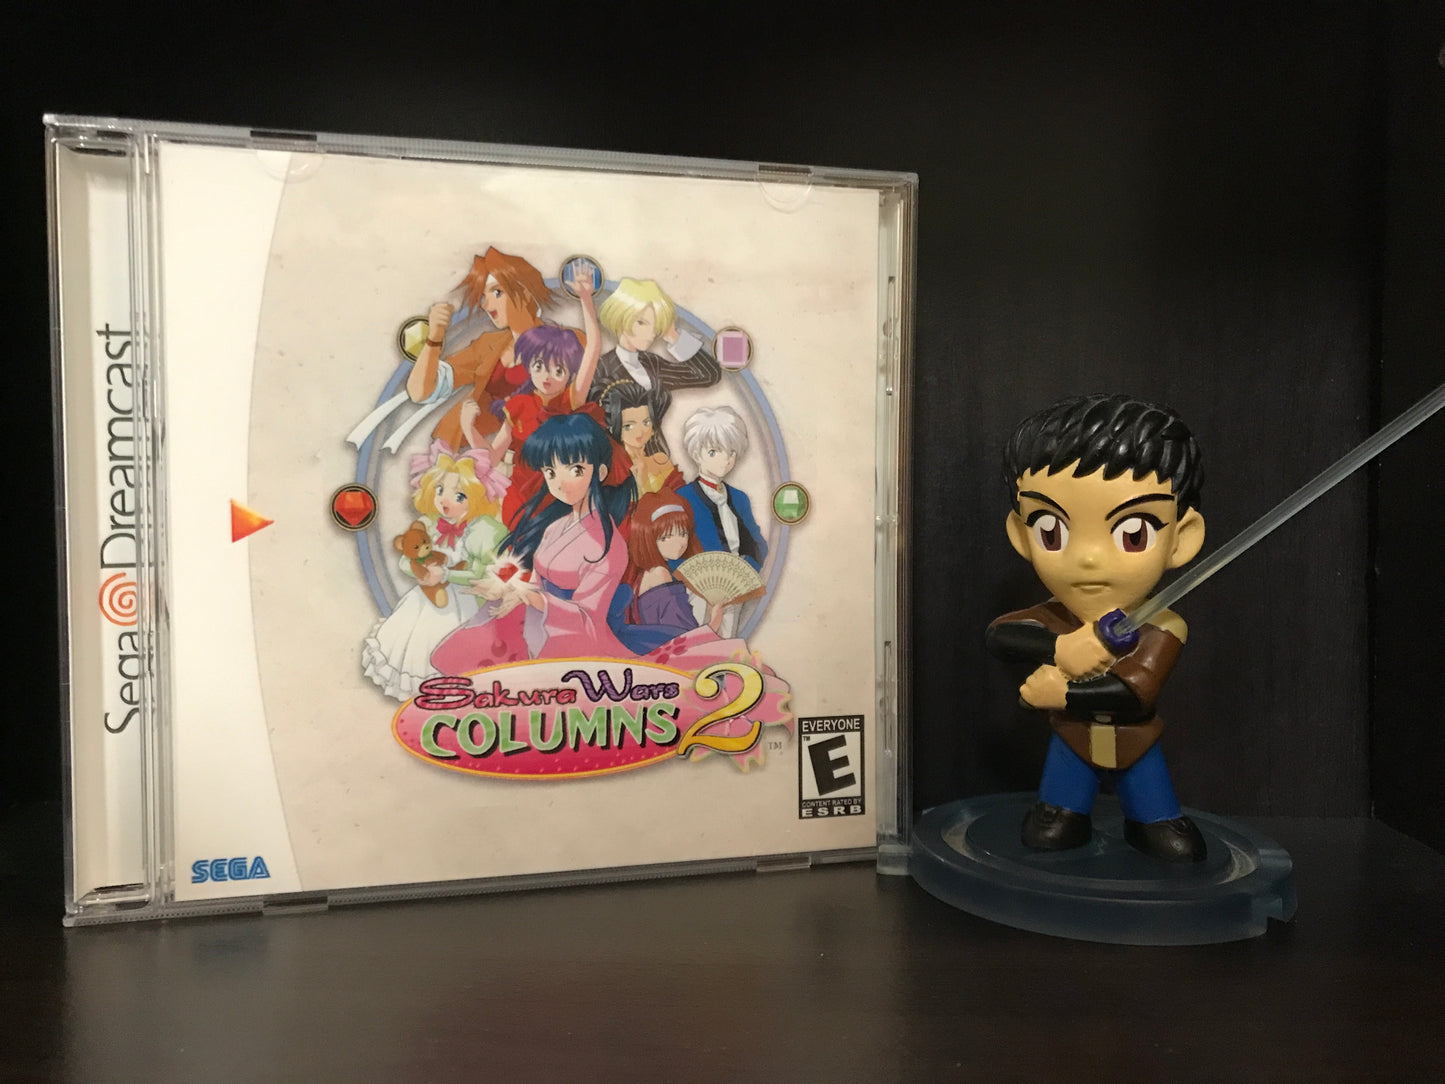 Sakura Wars Columns 2 (English Translation) [Sega Dreamcast] Reproduction